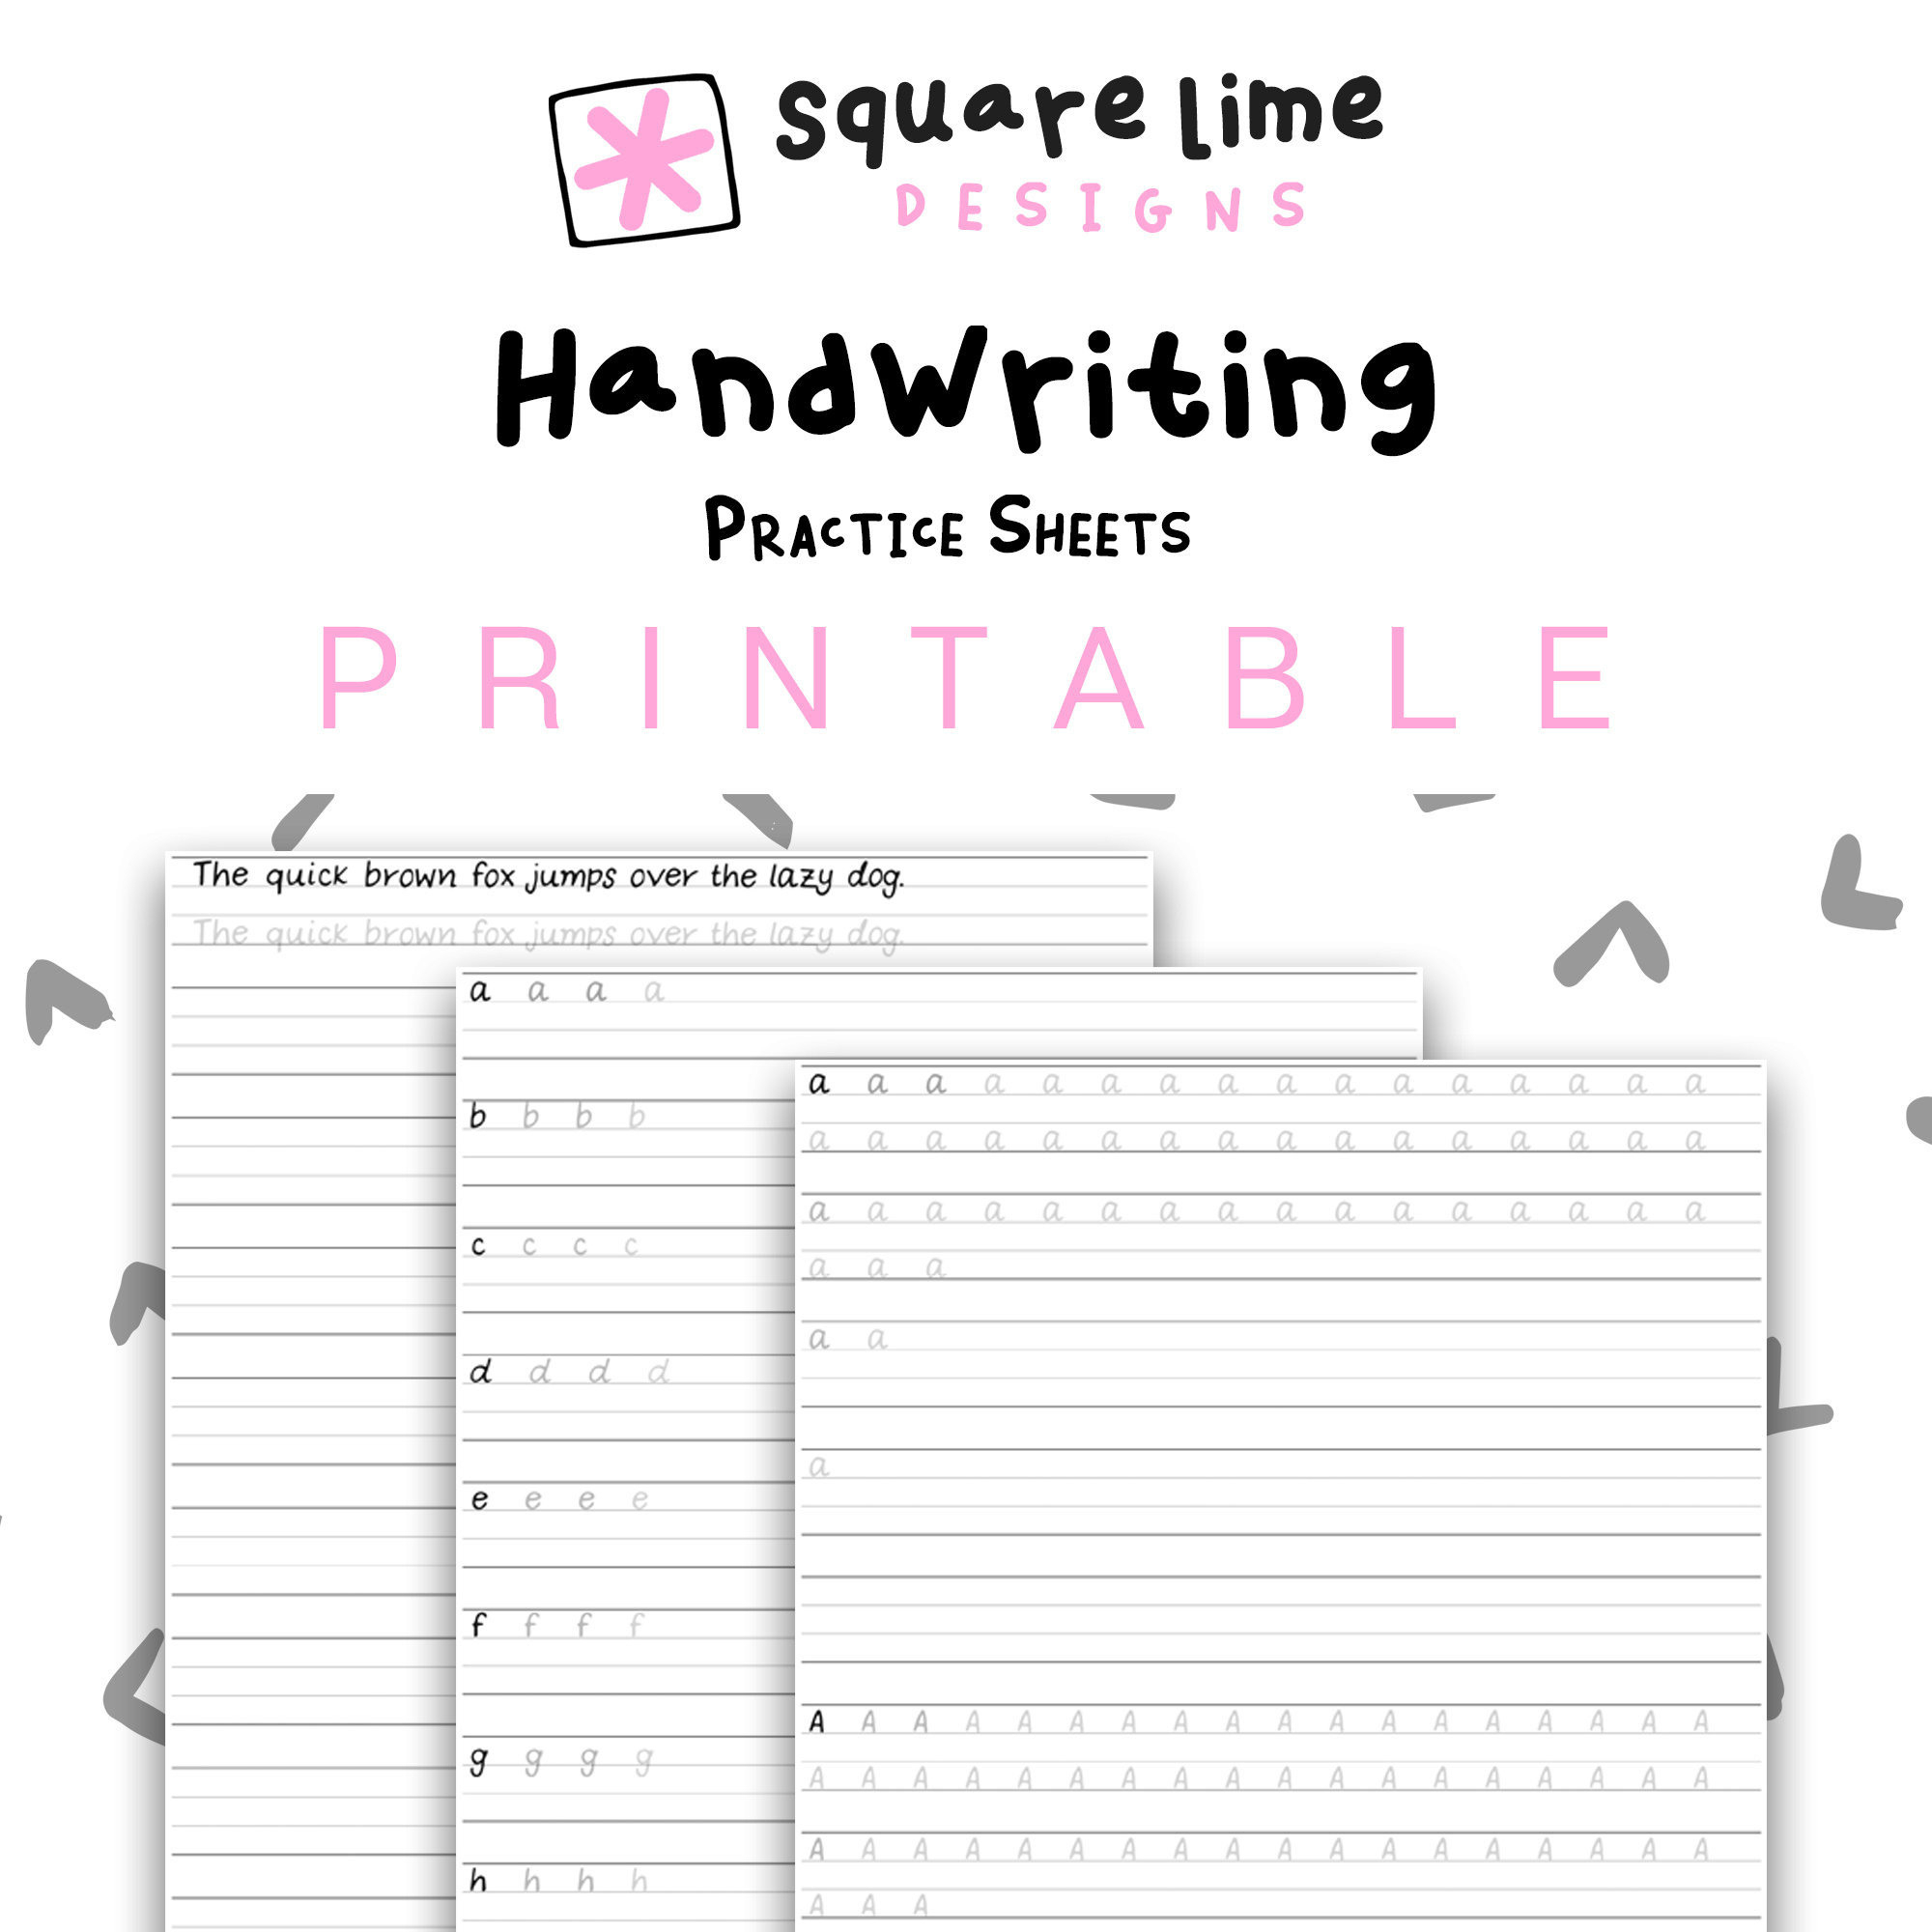 handwriting-worksheets-pdf-for-adults-alphabetworksheetsfree